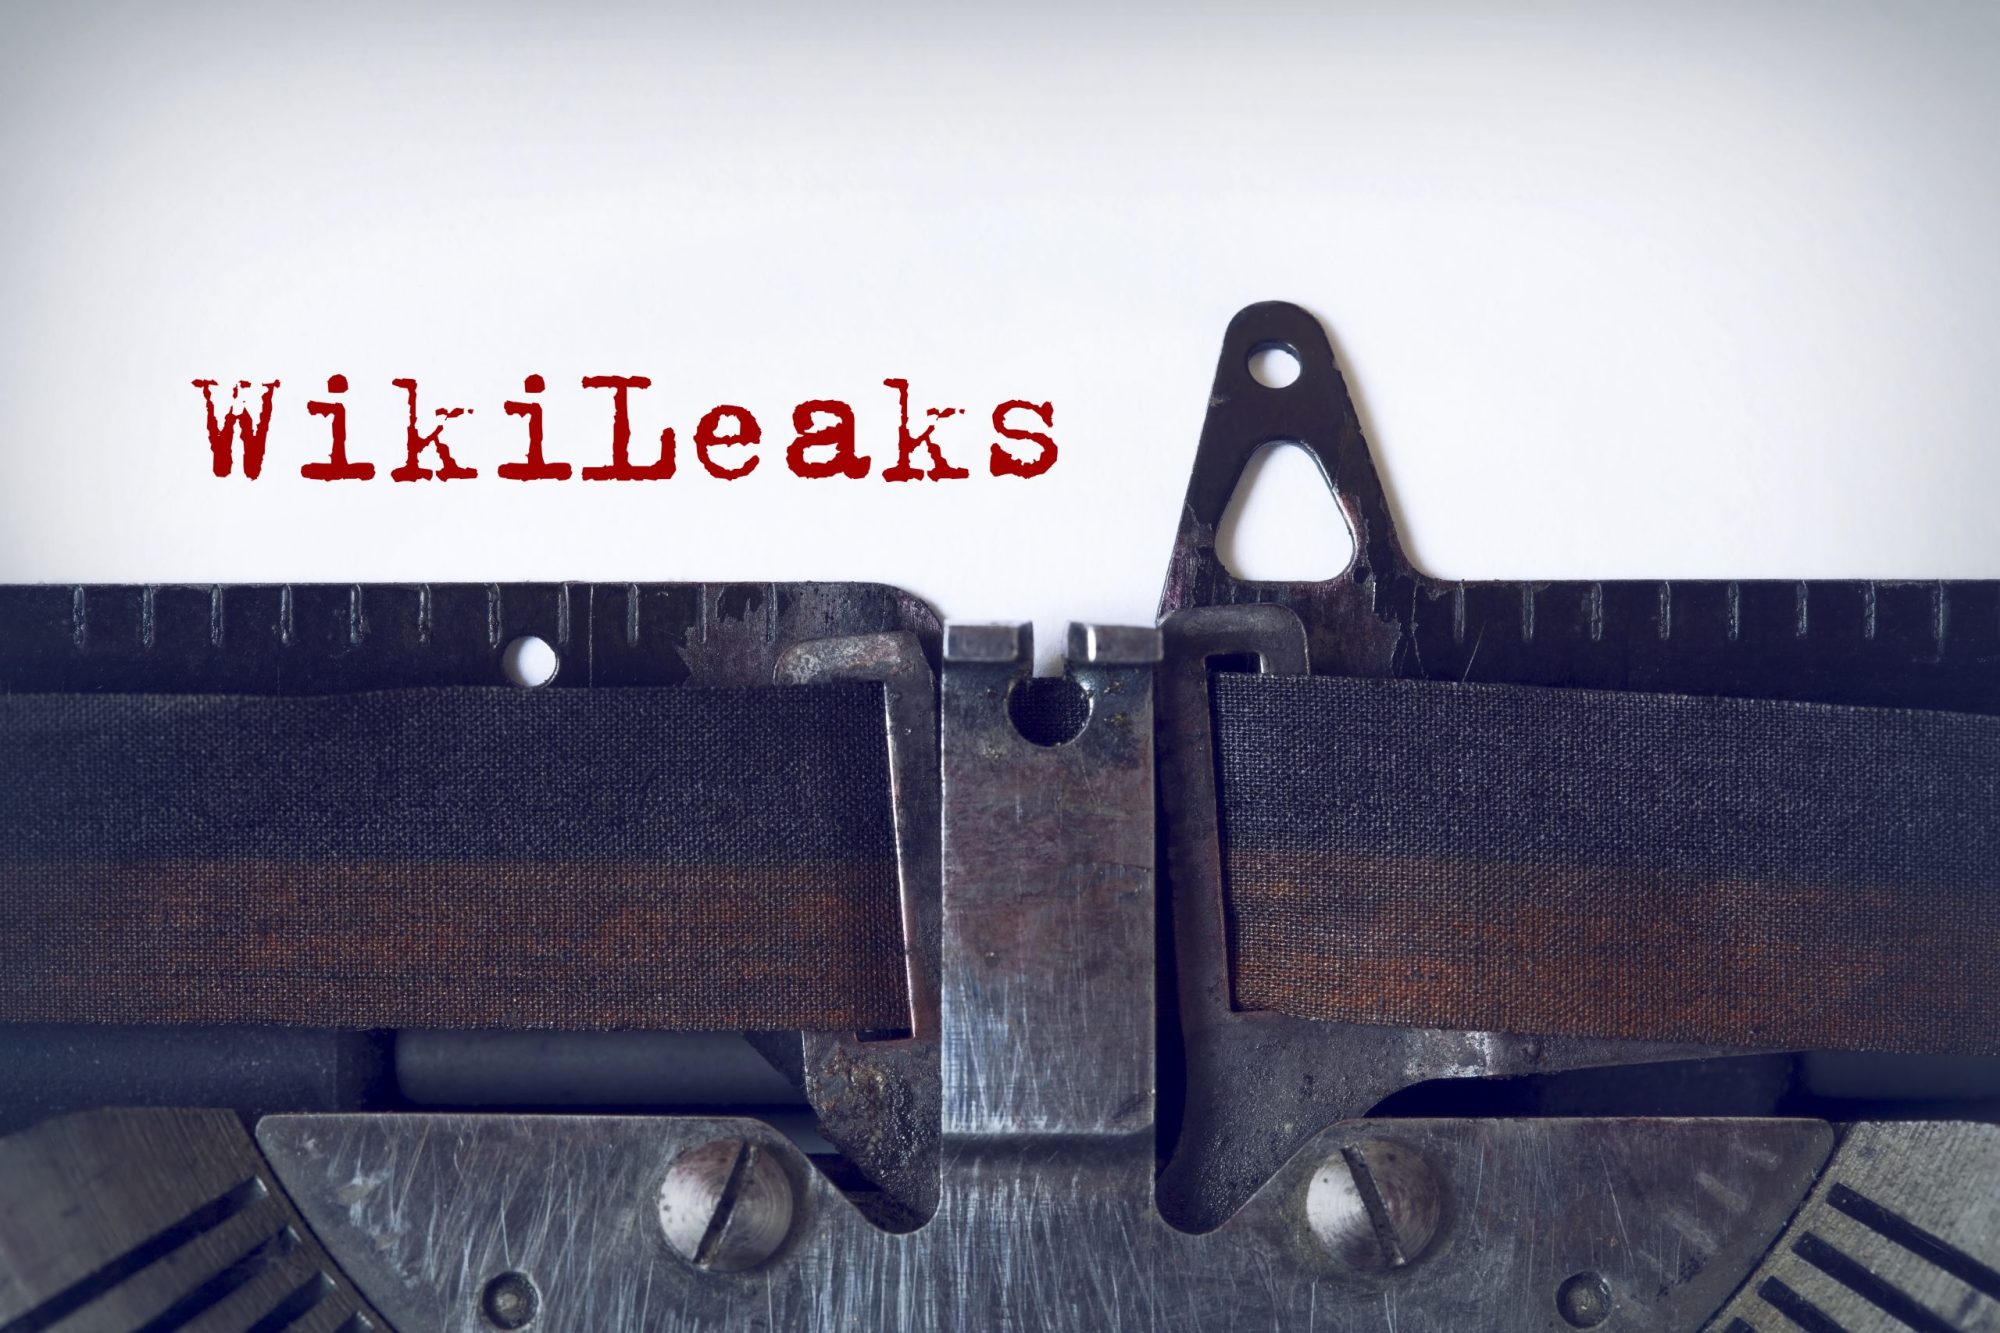 WikiLeaks written on a vintage typewriter Photo via Getty Images.